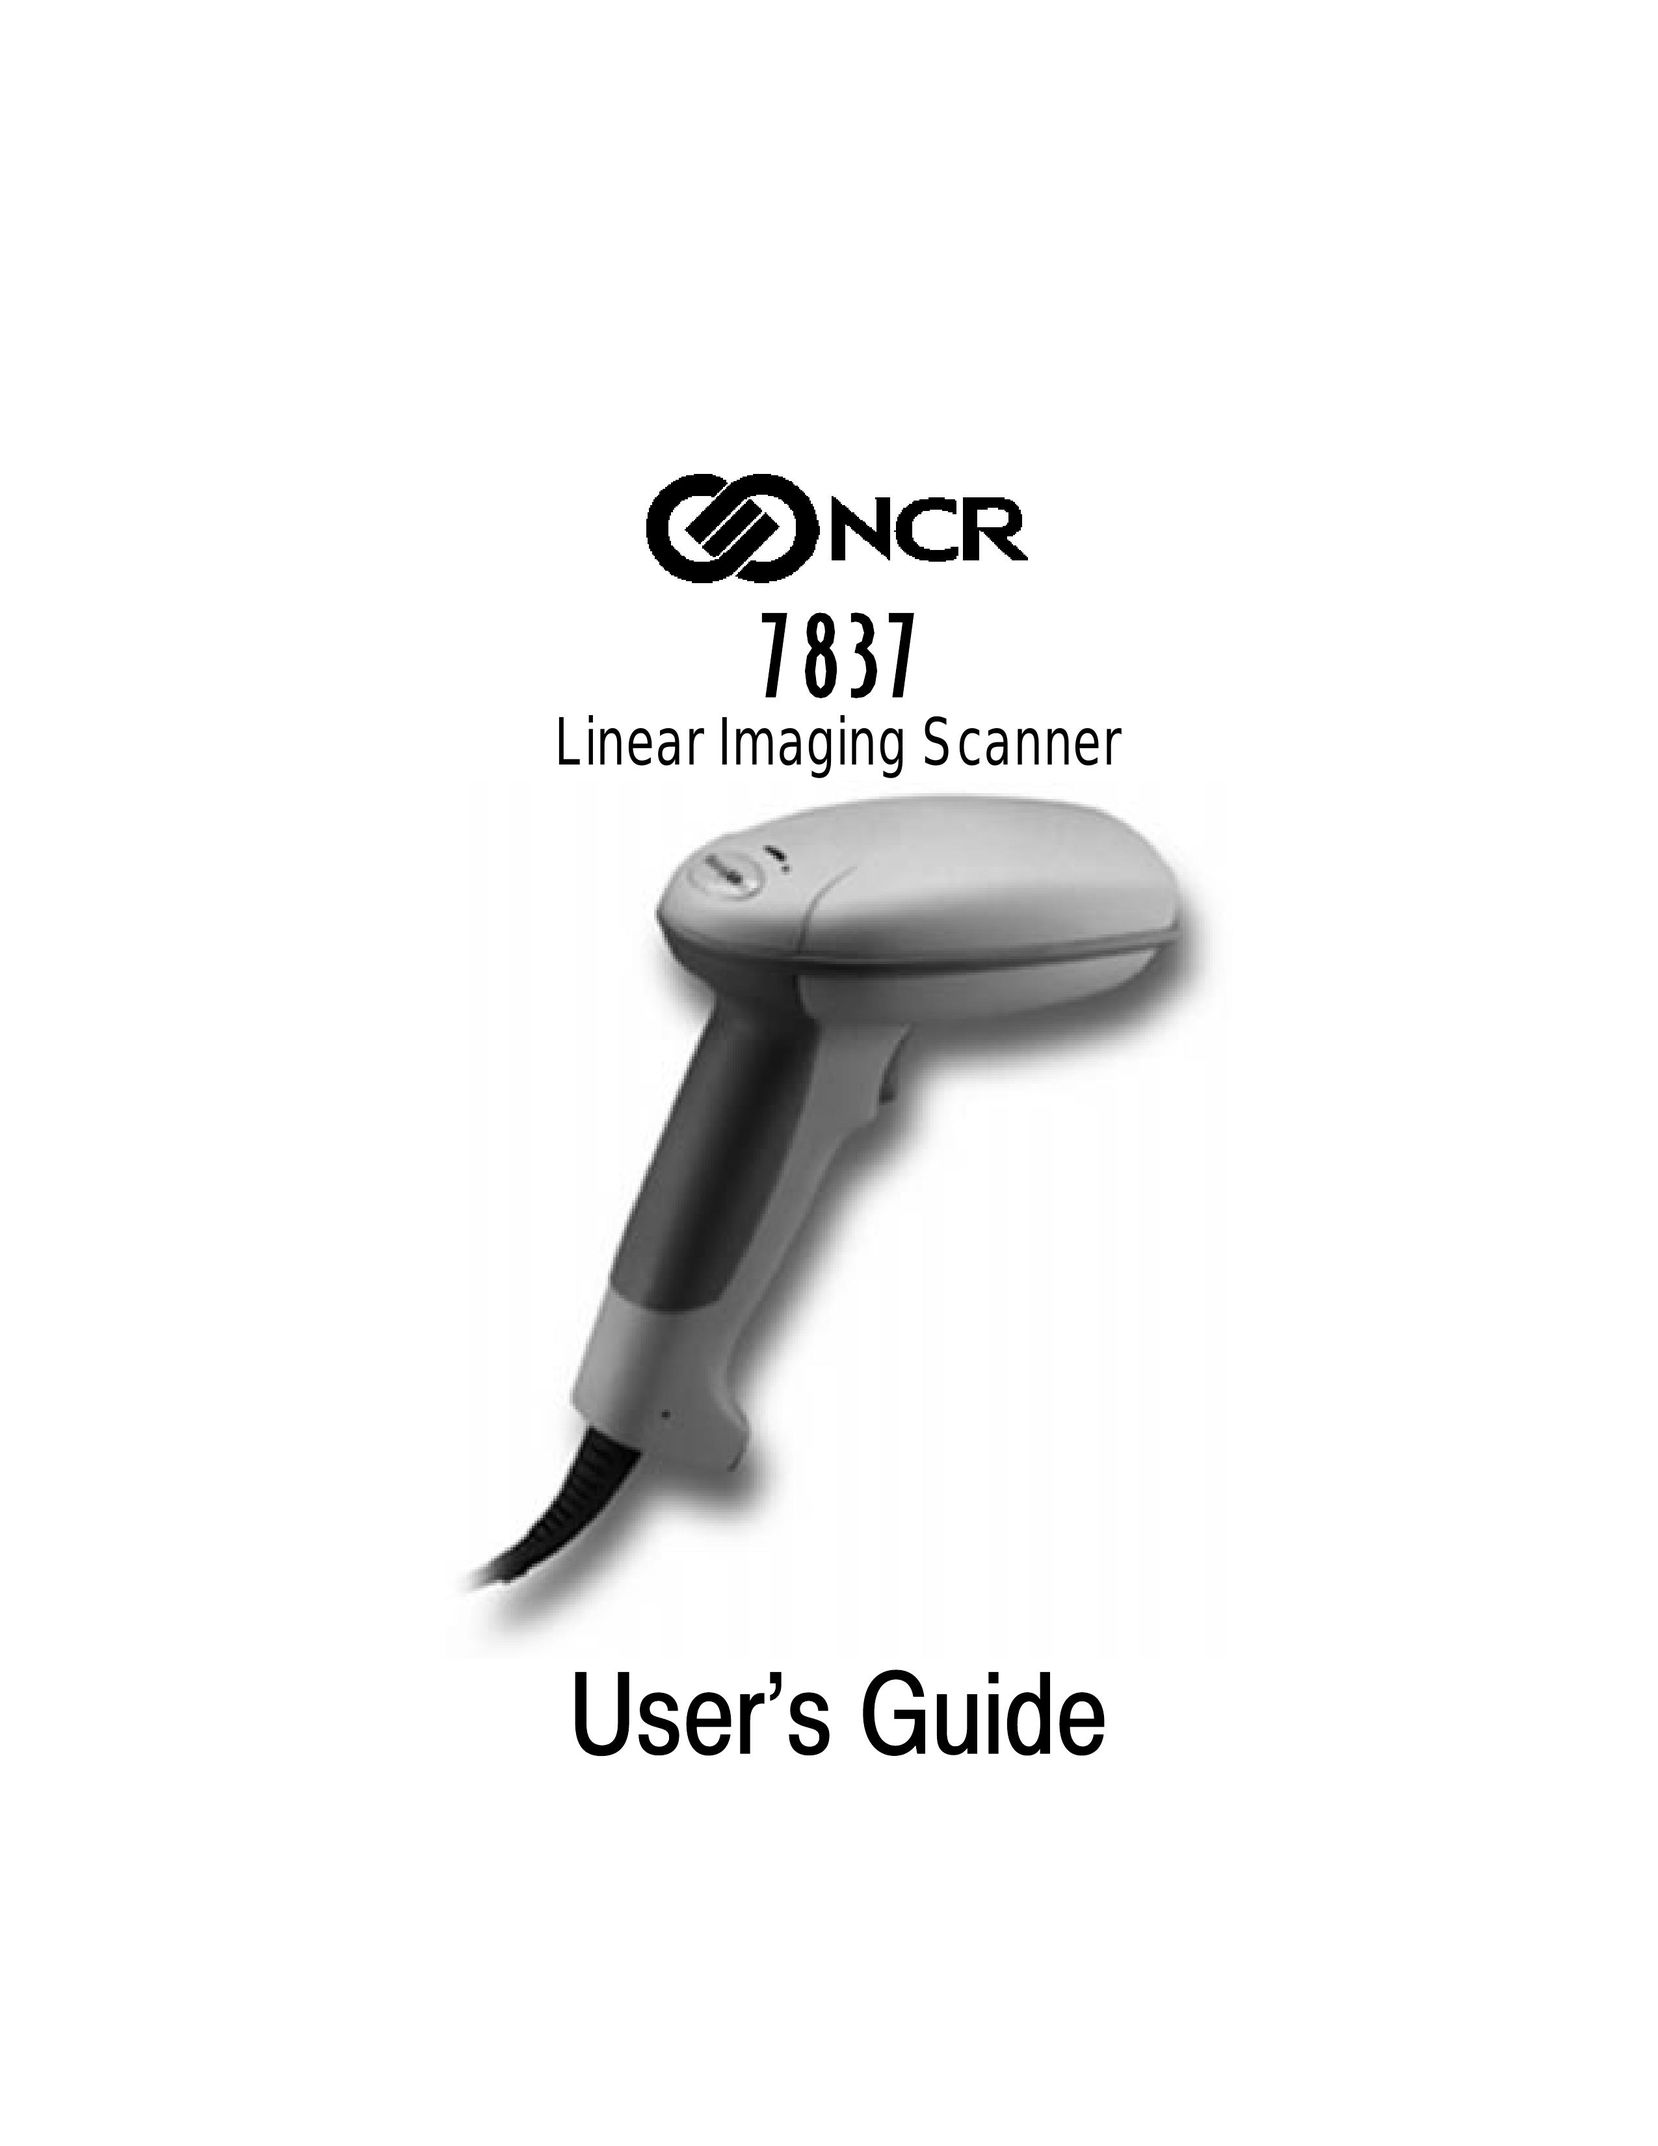 NCR 7837 Scanner User Manual